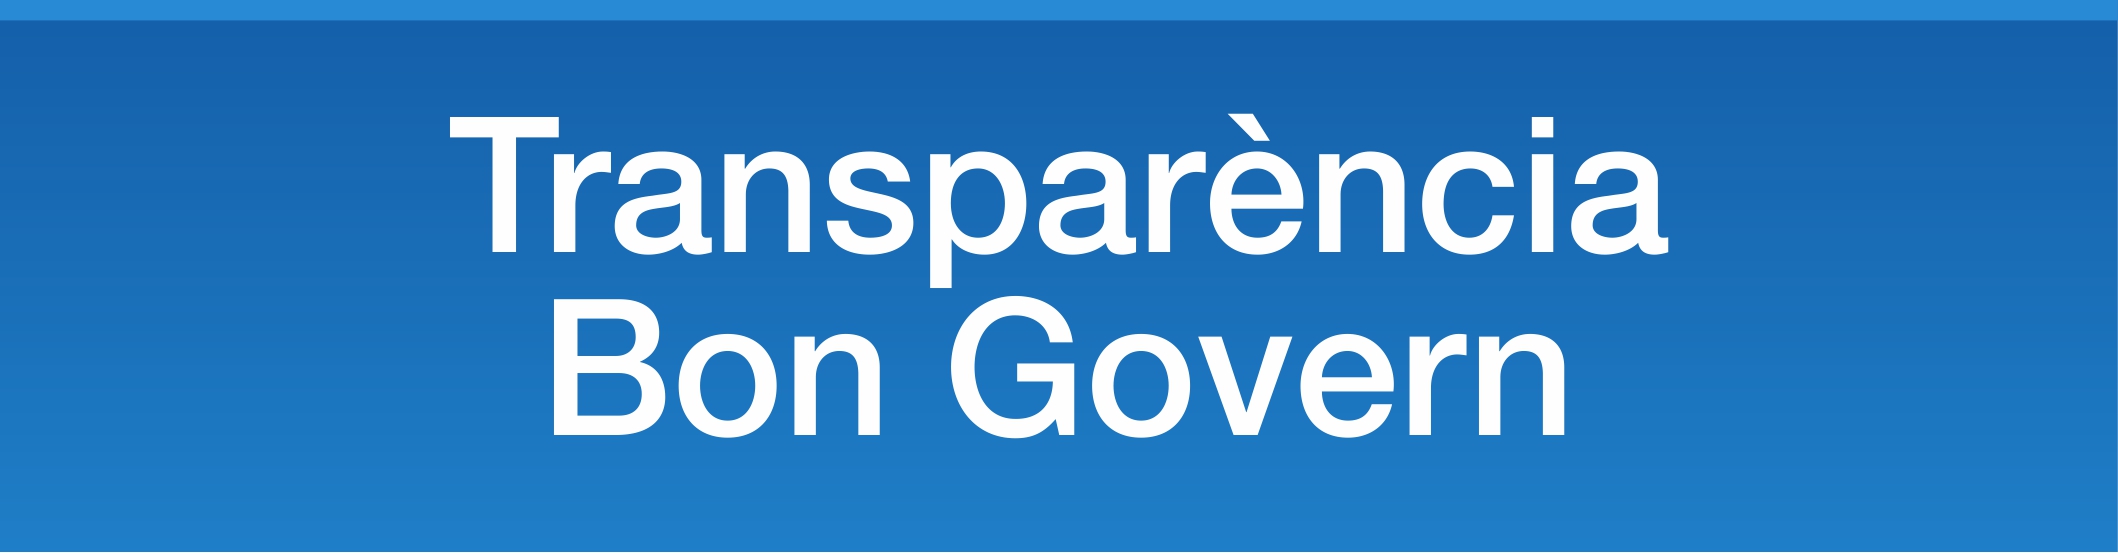 Banner transparencia